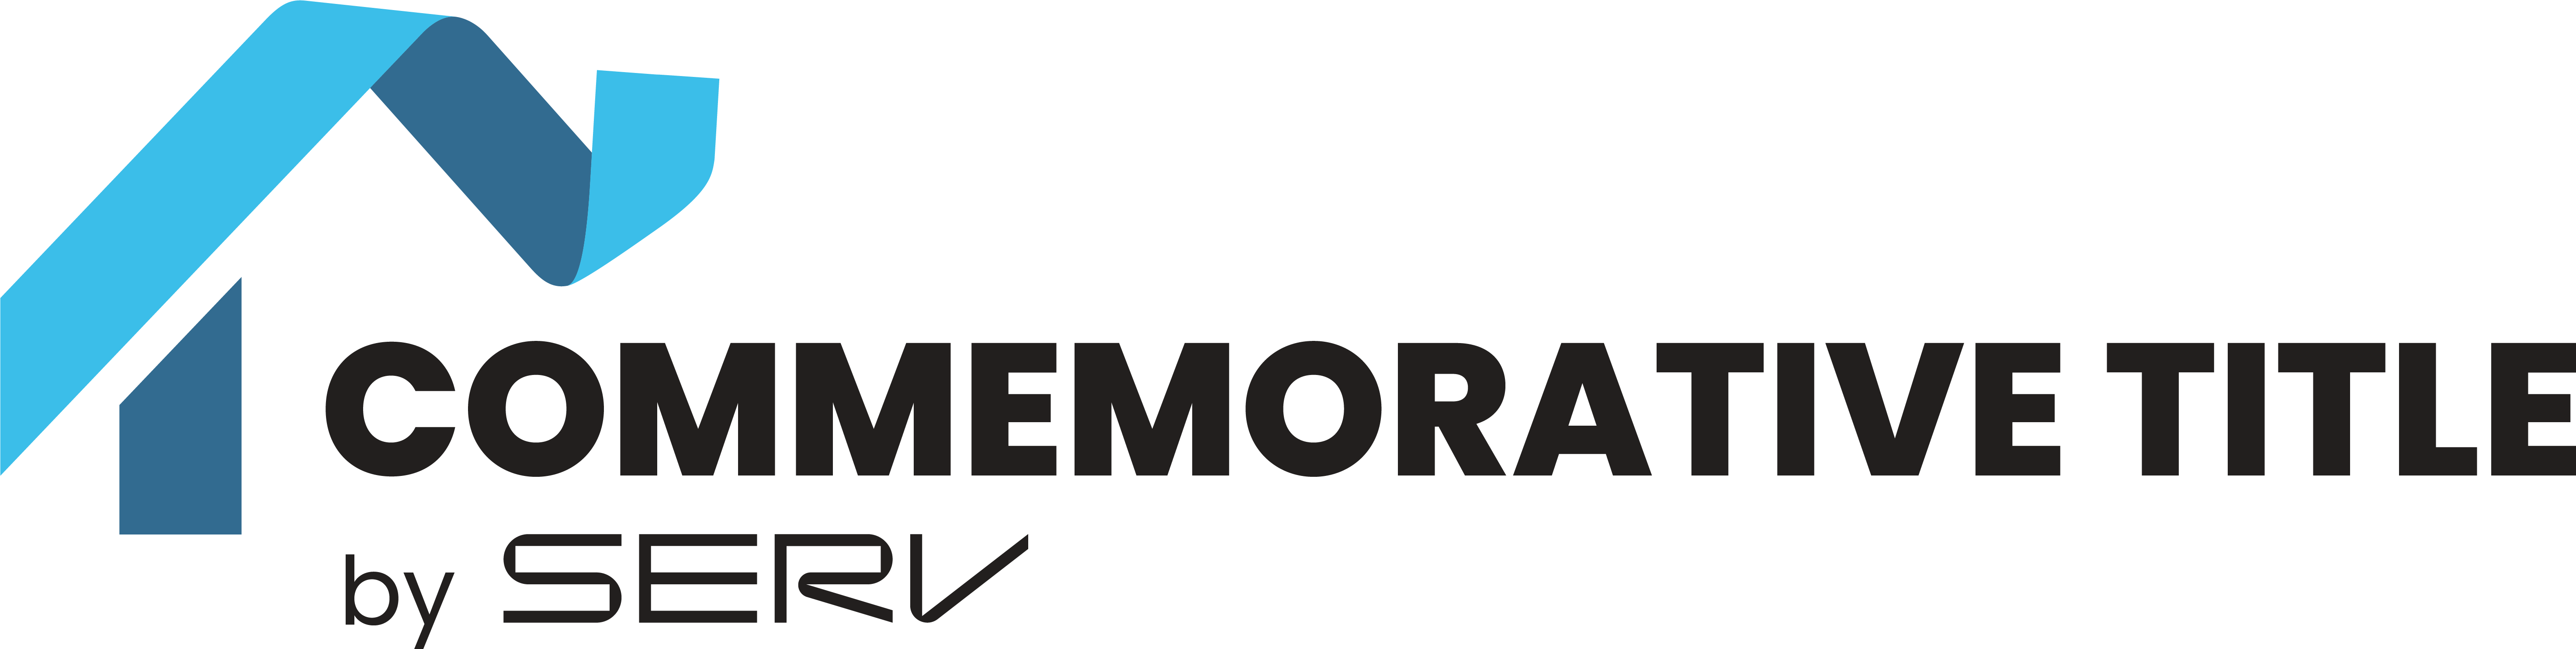 Victorian Commemorative Titles Logo